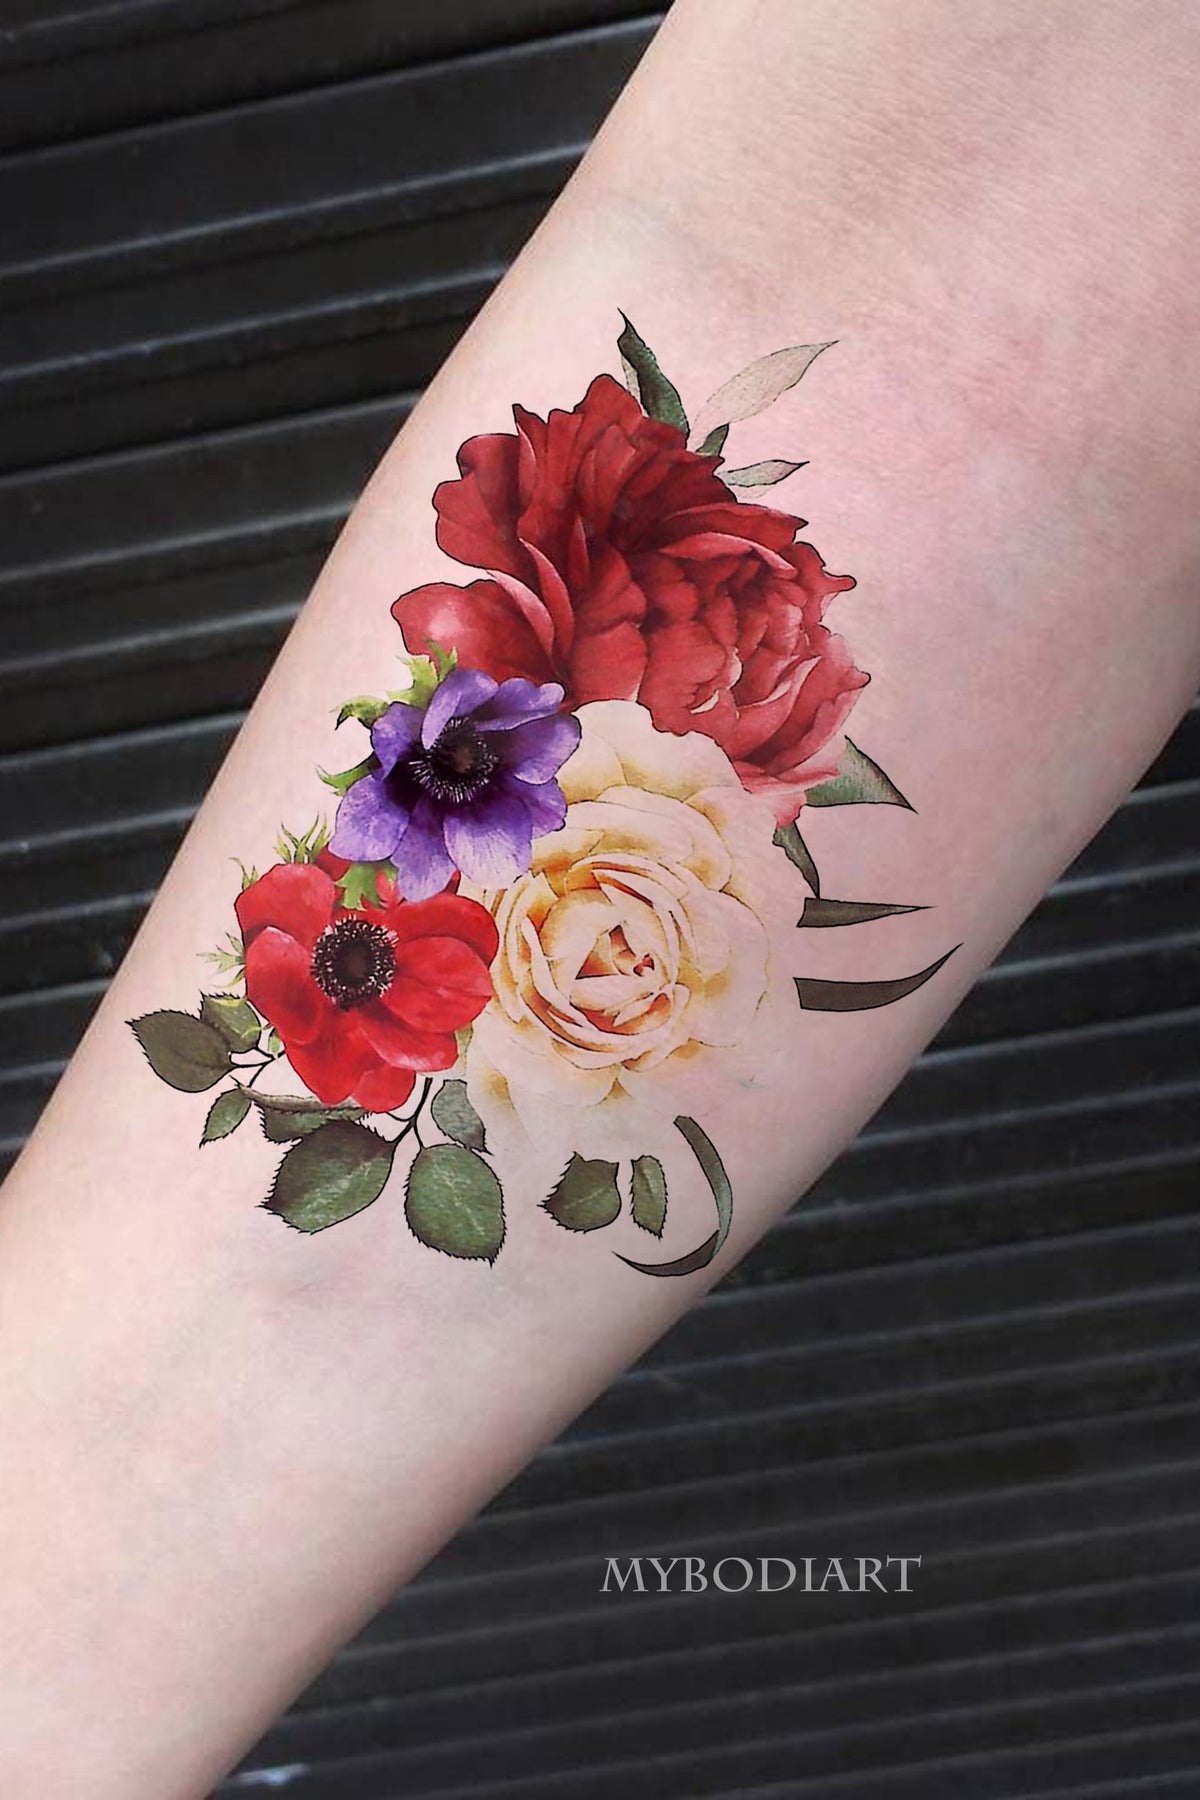 809 Marigold Flower Tattoo Images Stock Photos  Vectors  Shutterstock